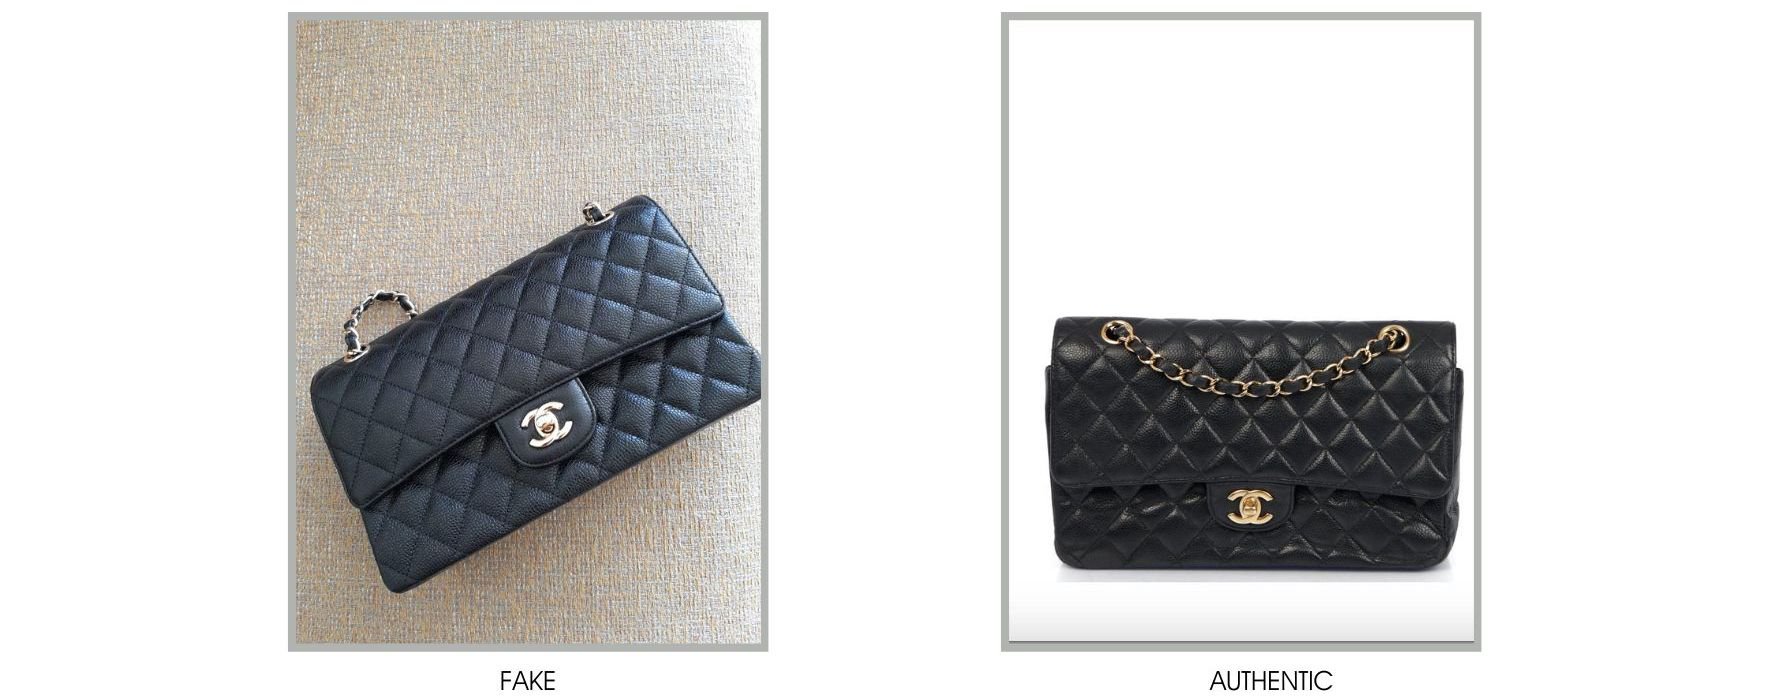 Chanel Stitch - UK - Handbags - Go handmade